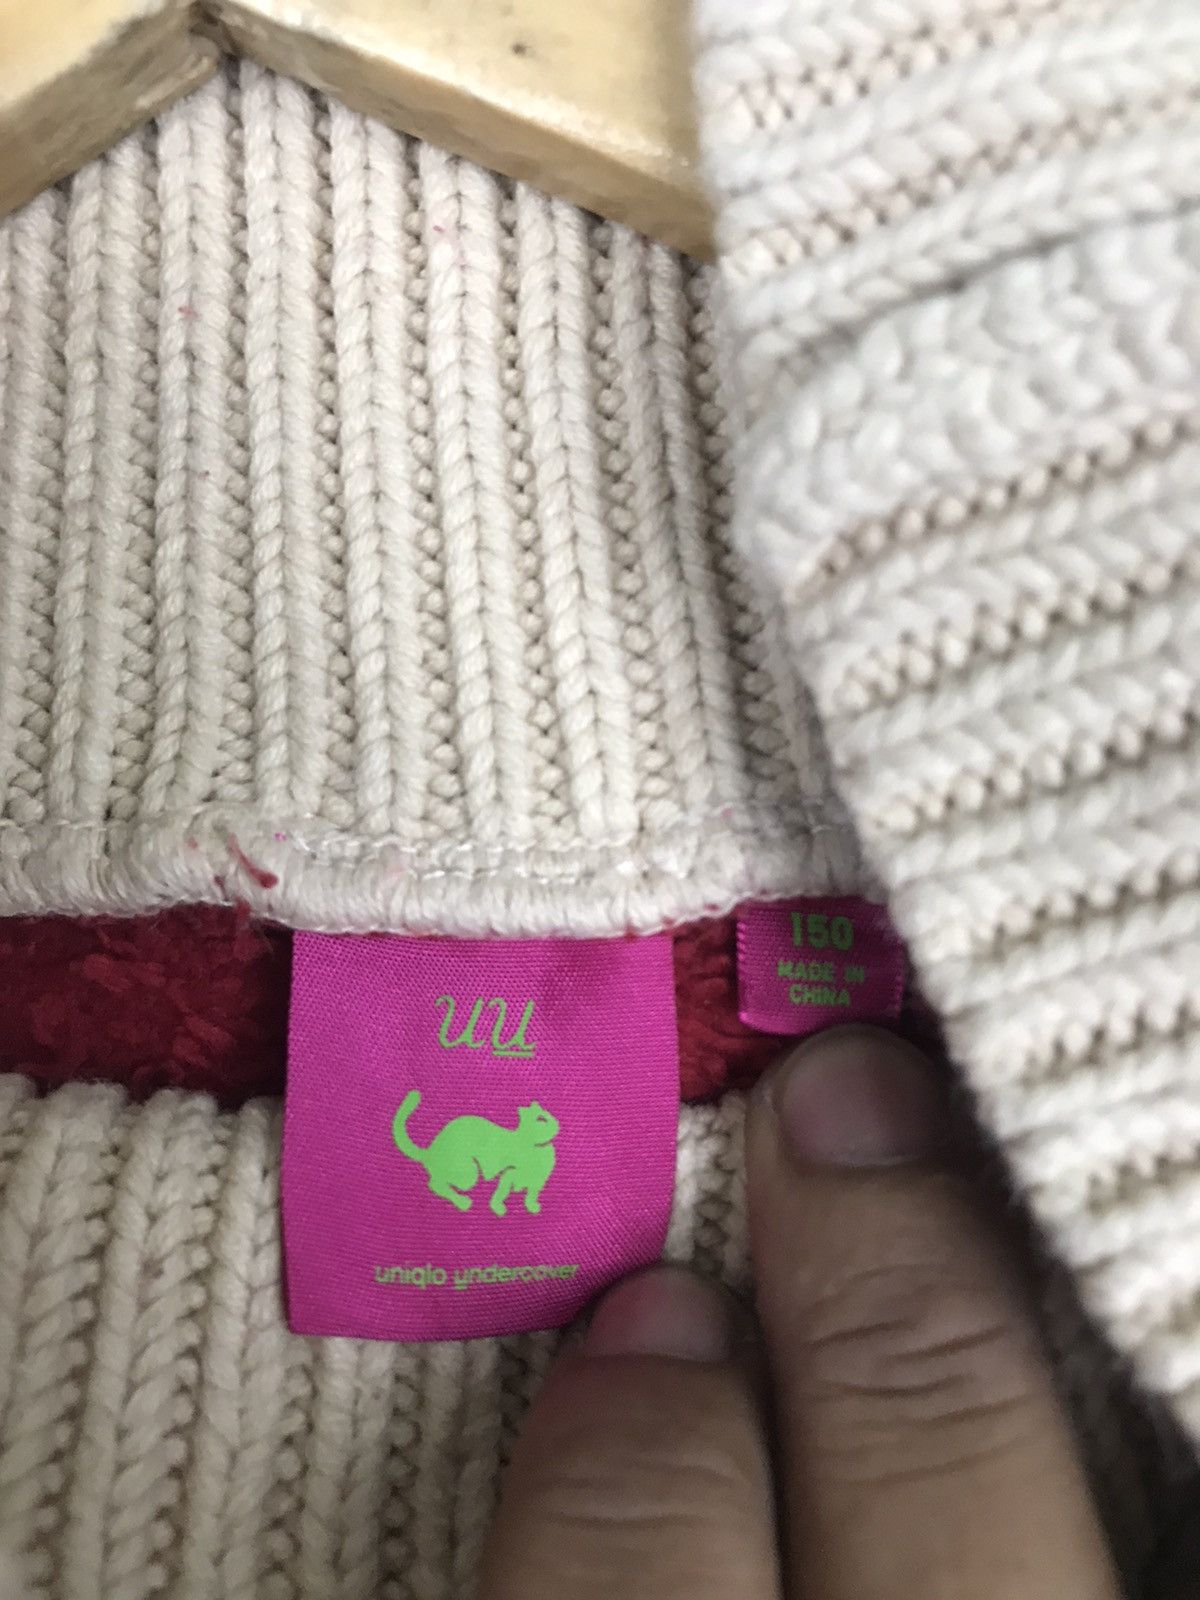 LAST DROP!Uniqlo undercover faux fur cable knit sweater-1519 - 5